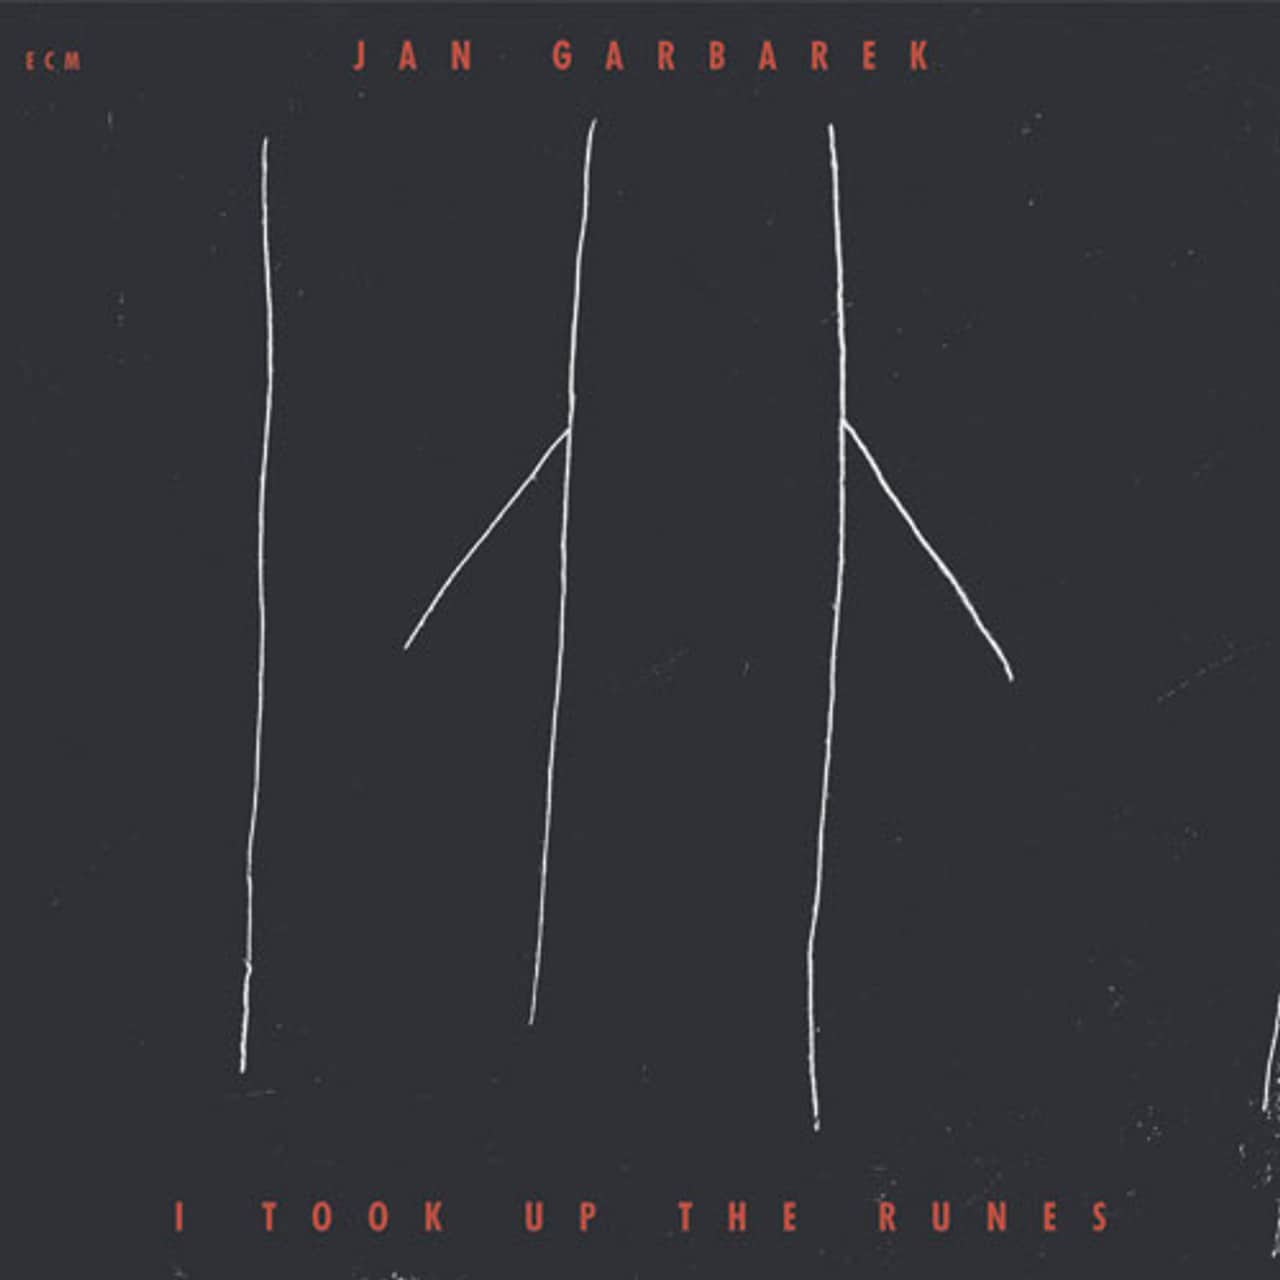 JAN GARBAREK - I TOOK UP THE RUNES (ECM)